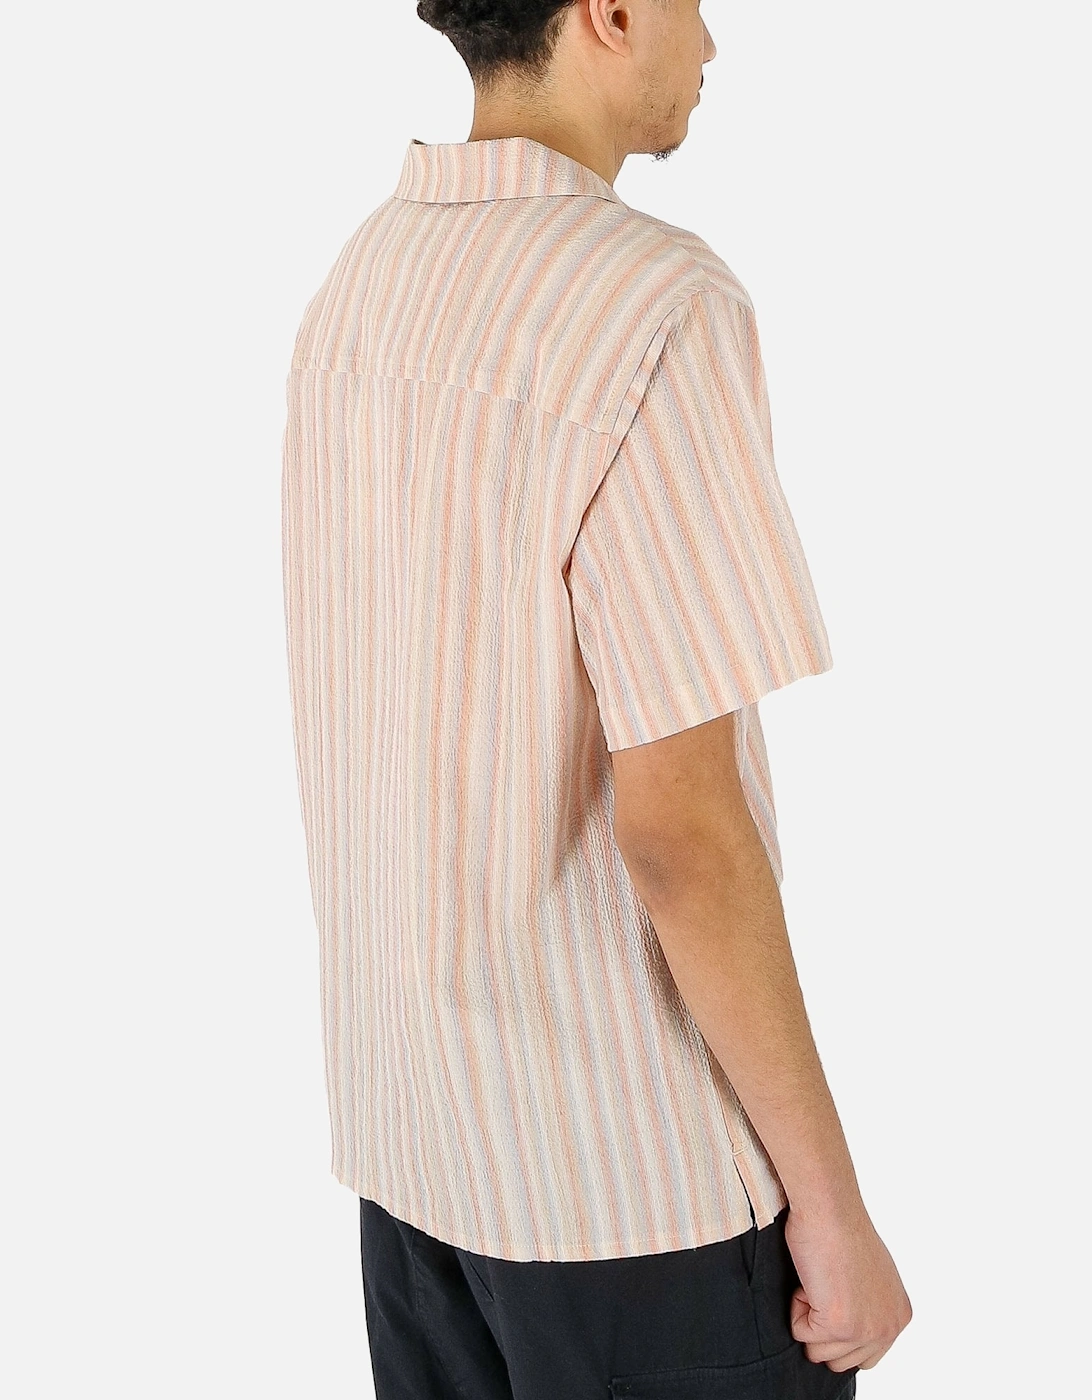 Didcot Pastel Stripe SS Shirt